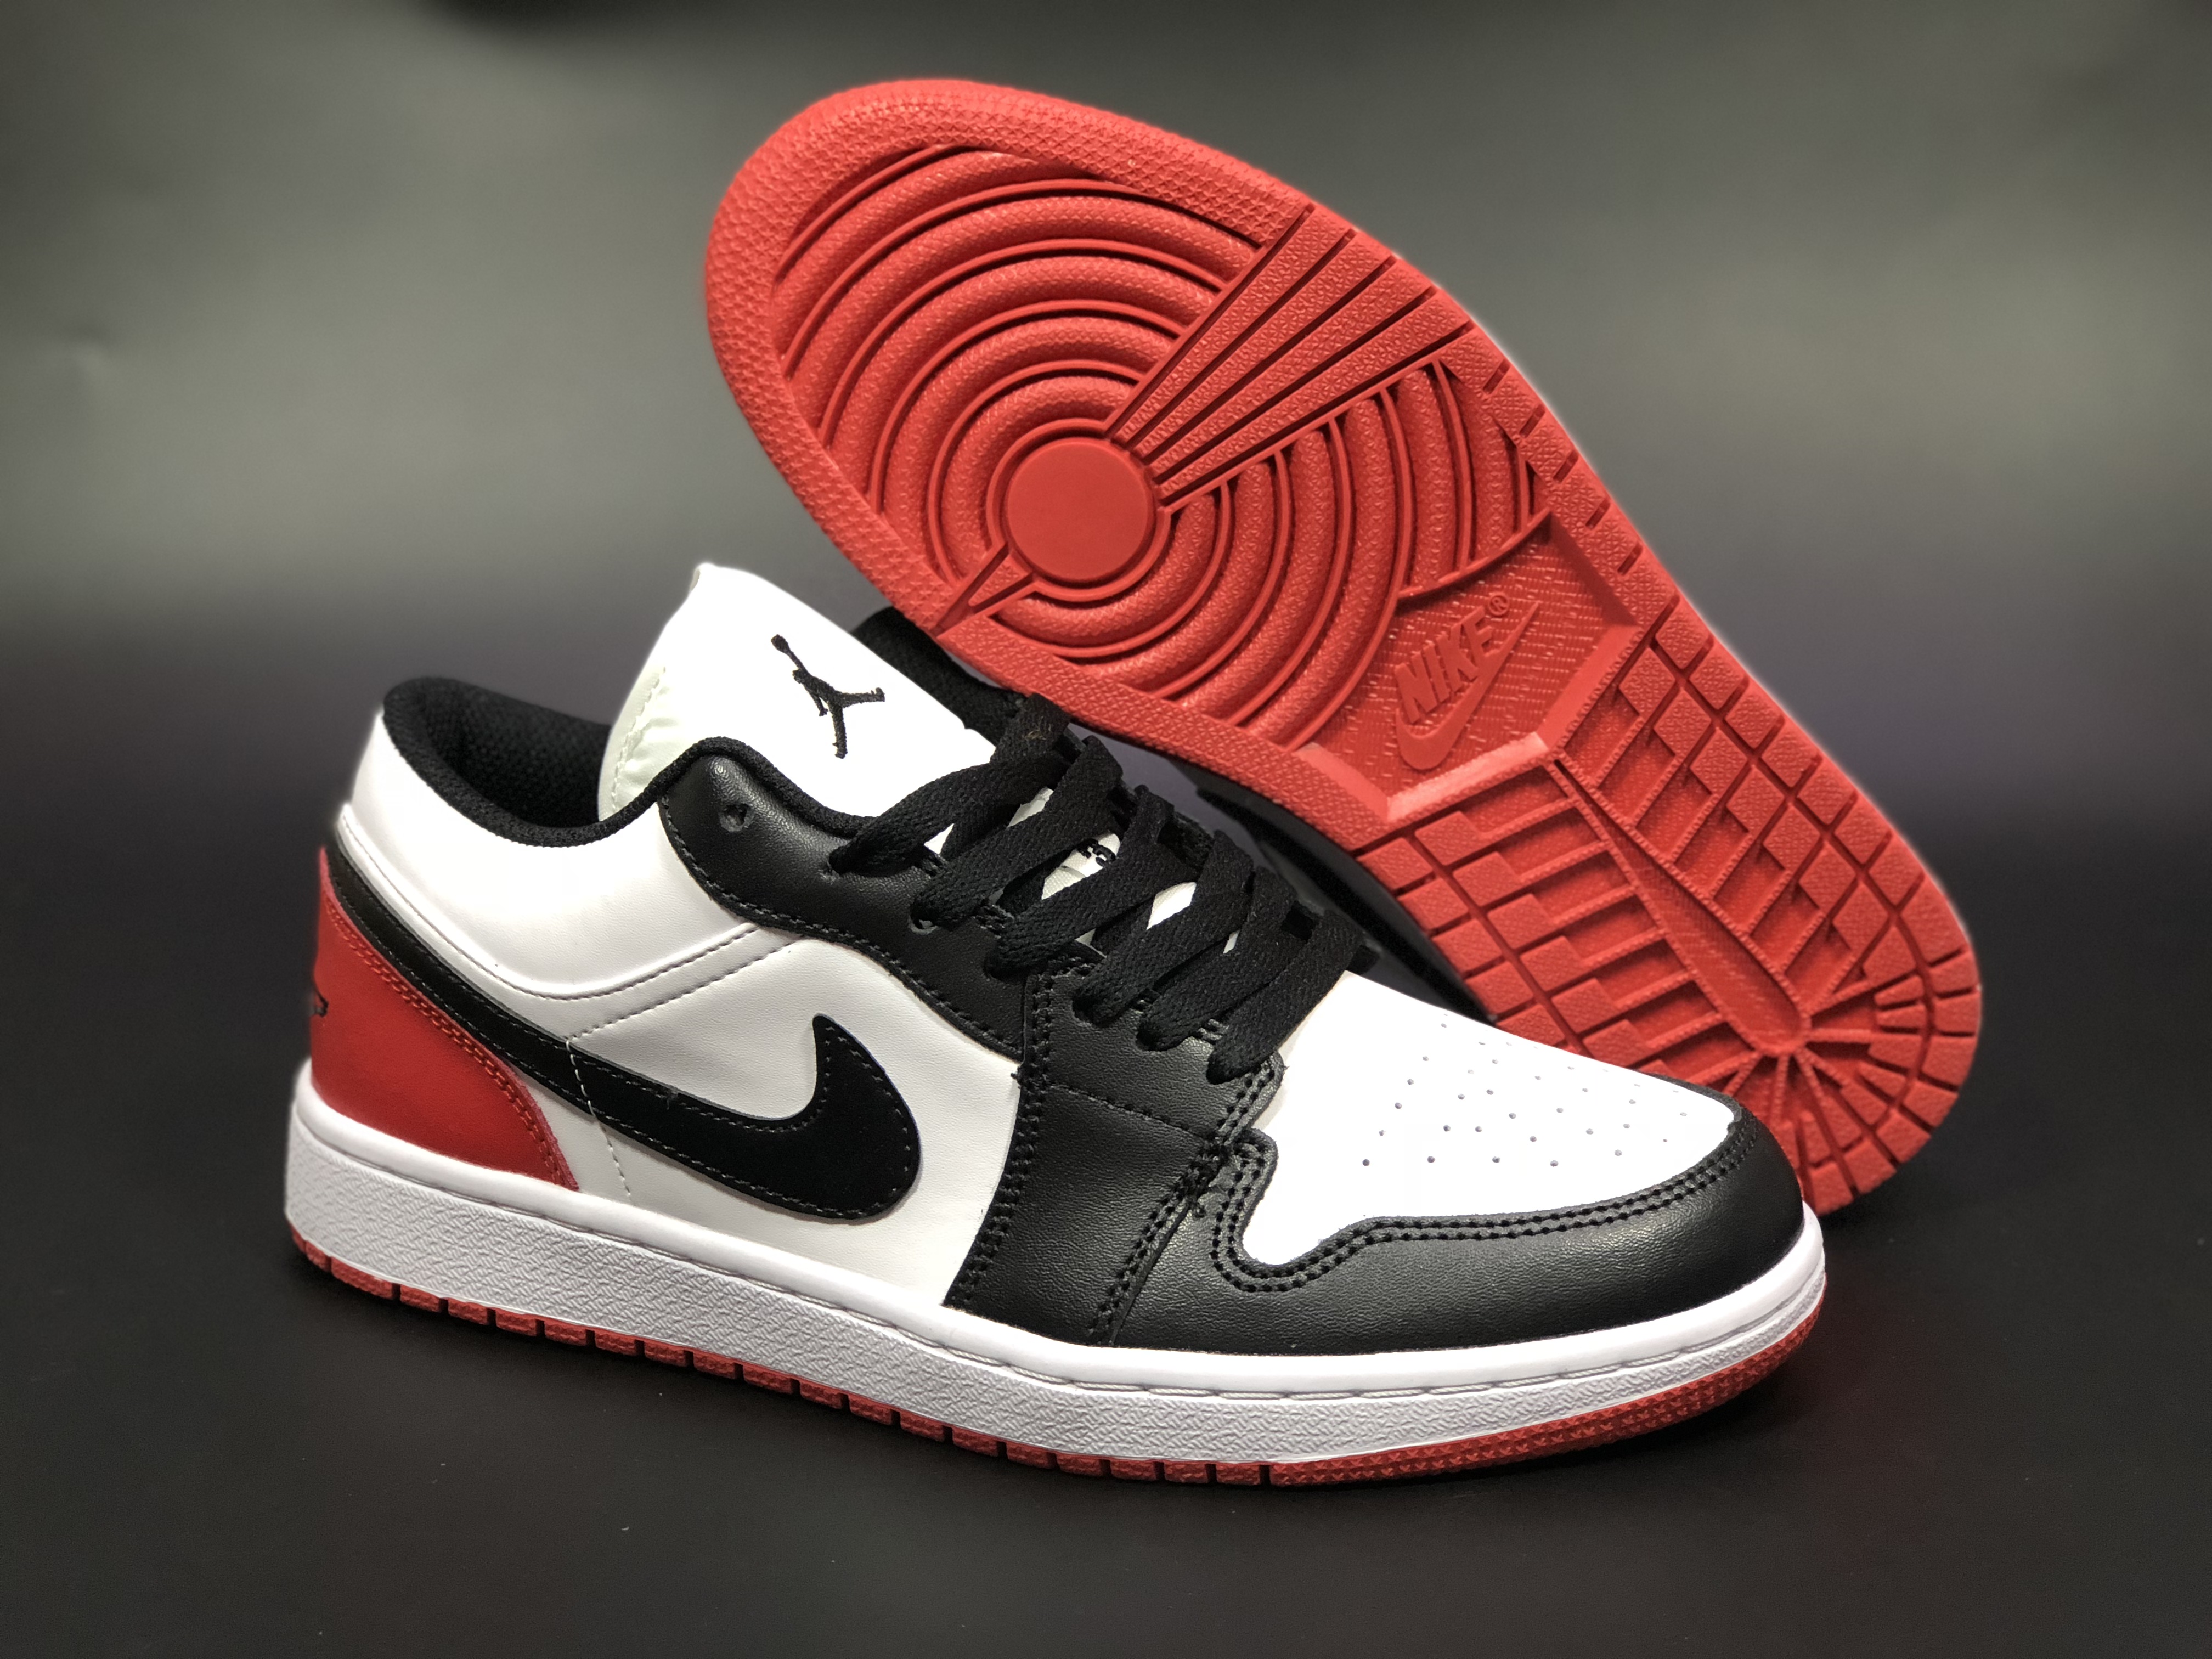 Air Jordan 1 Low Toe White Black Red Shoes For Women